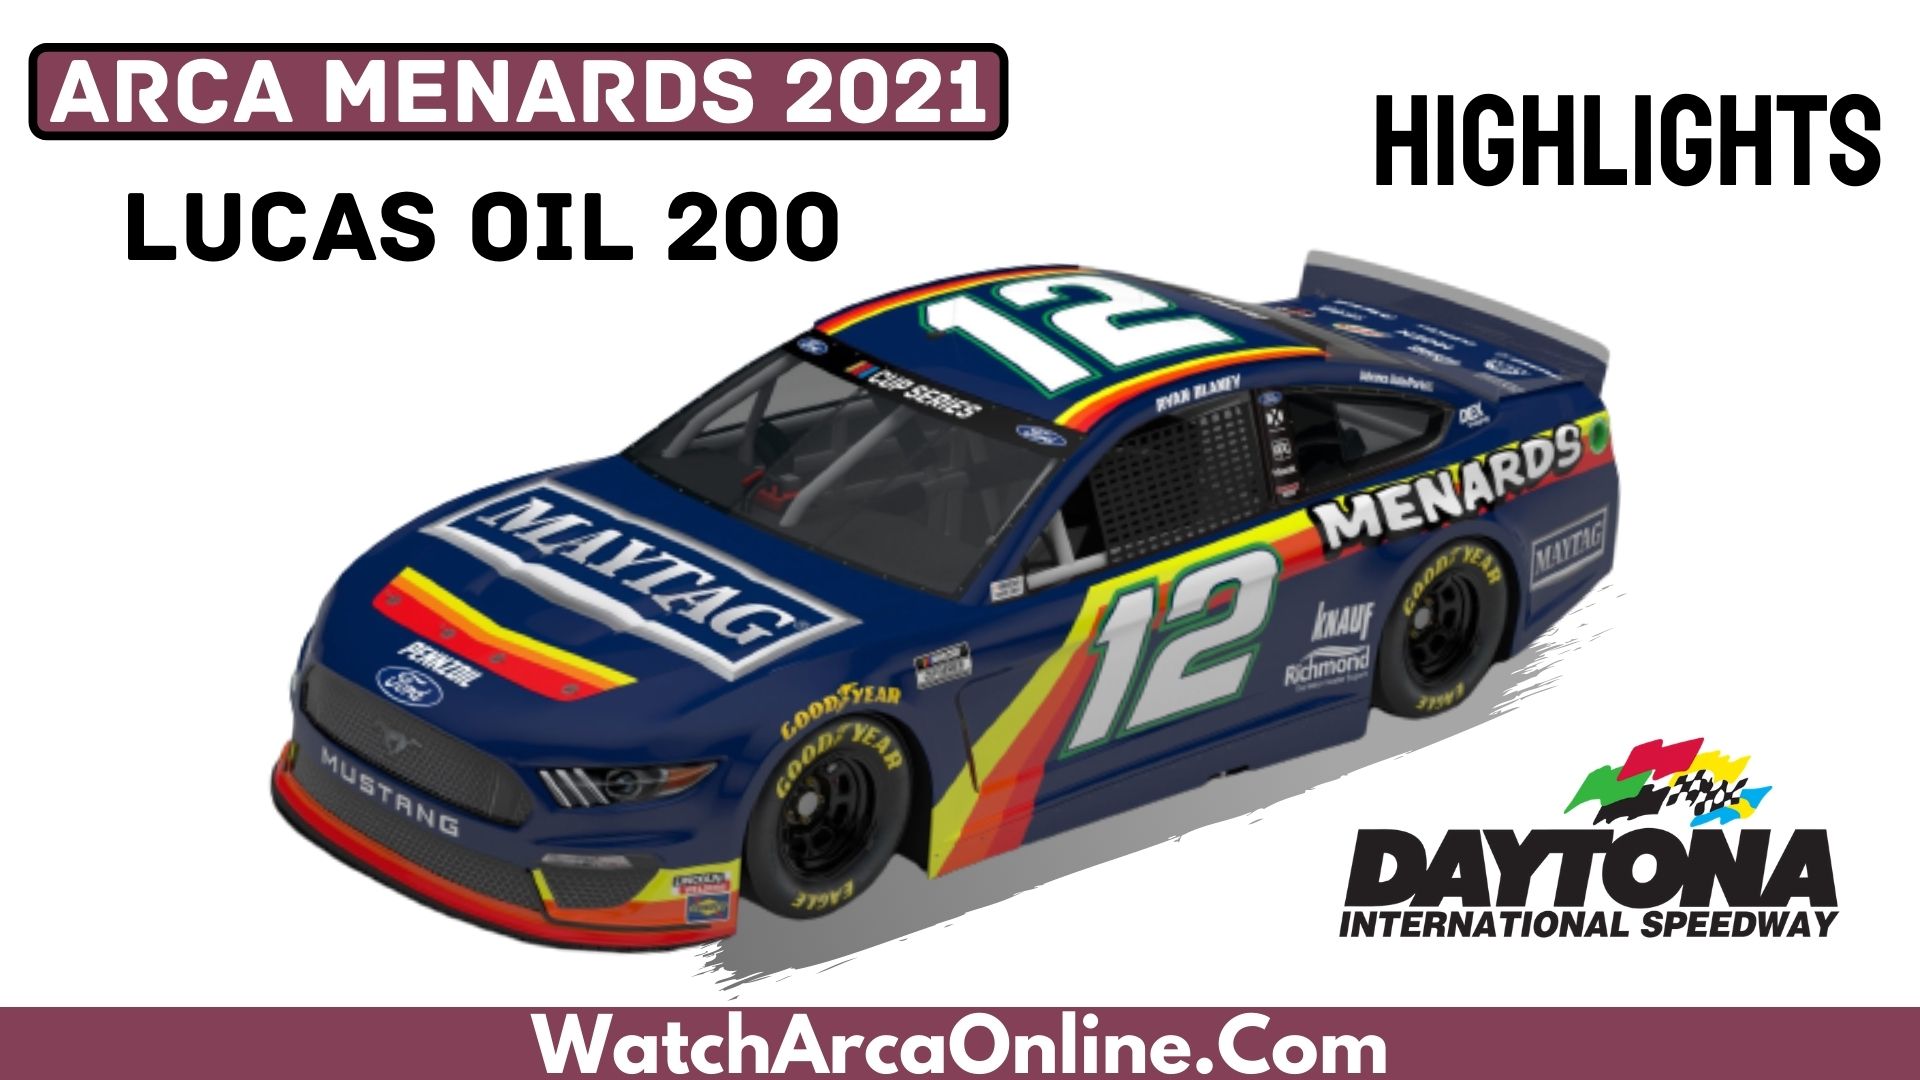 Lucas Oil 200 ARCA Racing Highlights 2021